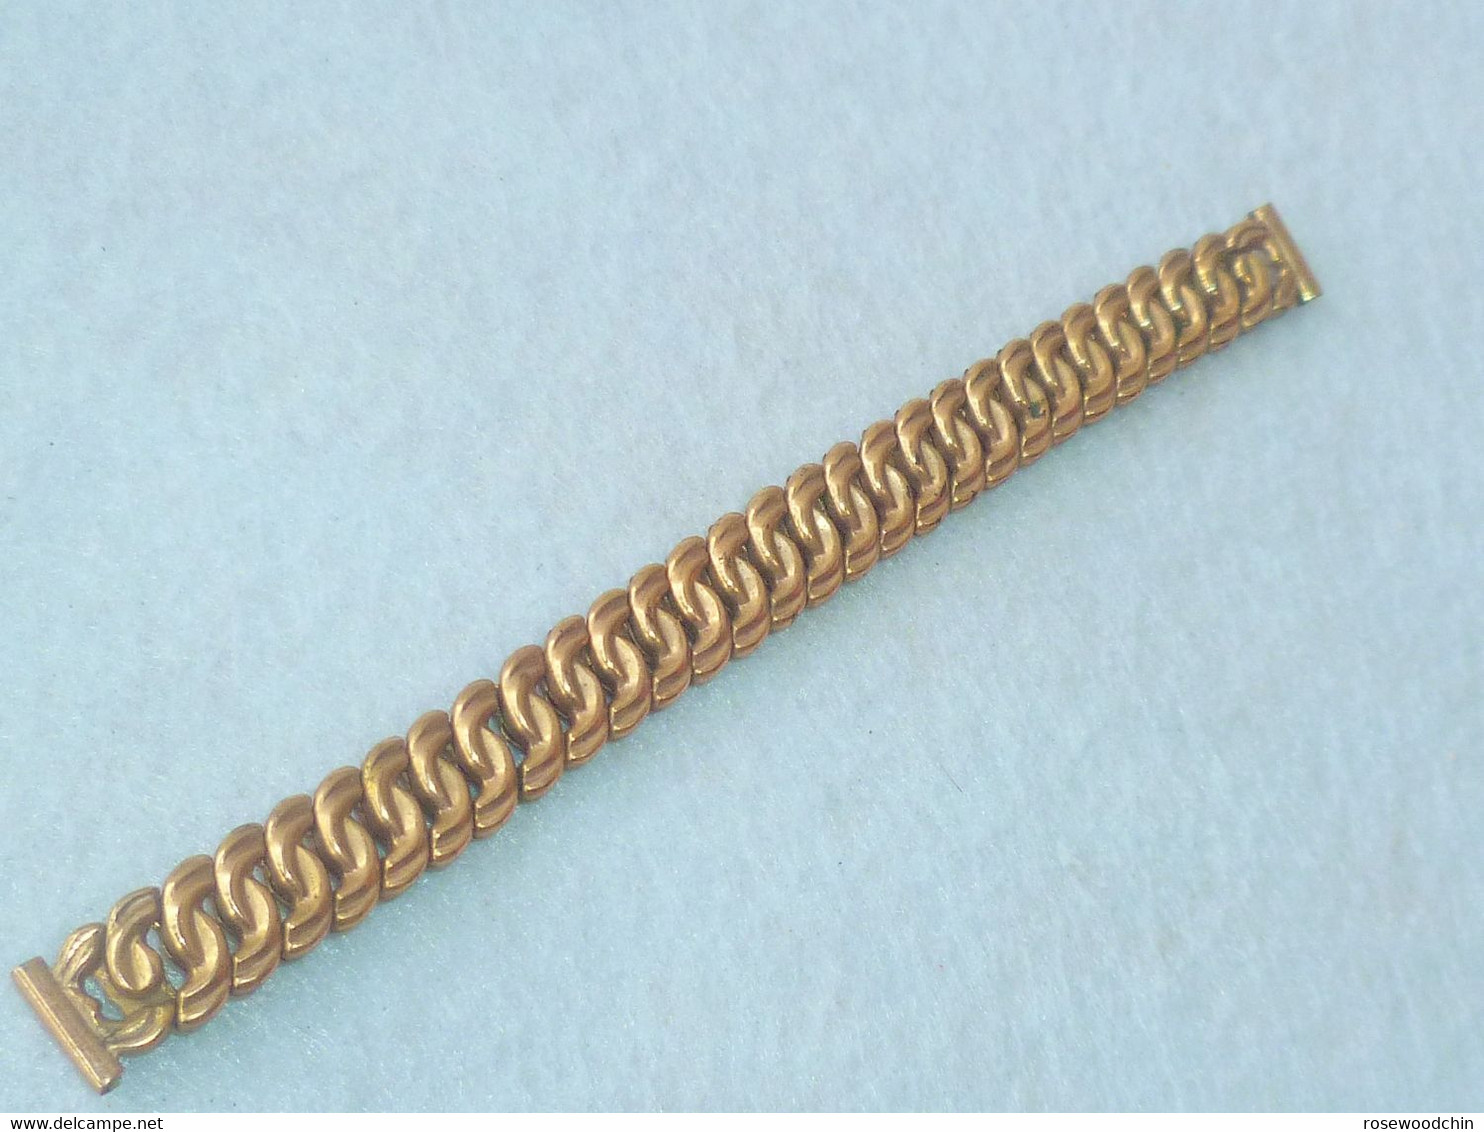 Vintage Gold Tone Expansion Lady Watch Bracelet Band Lug 10/11 mm (#61)